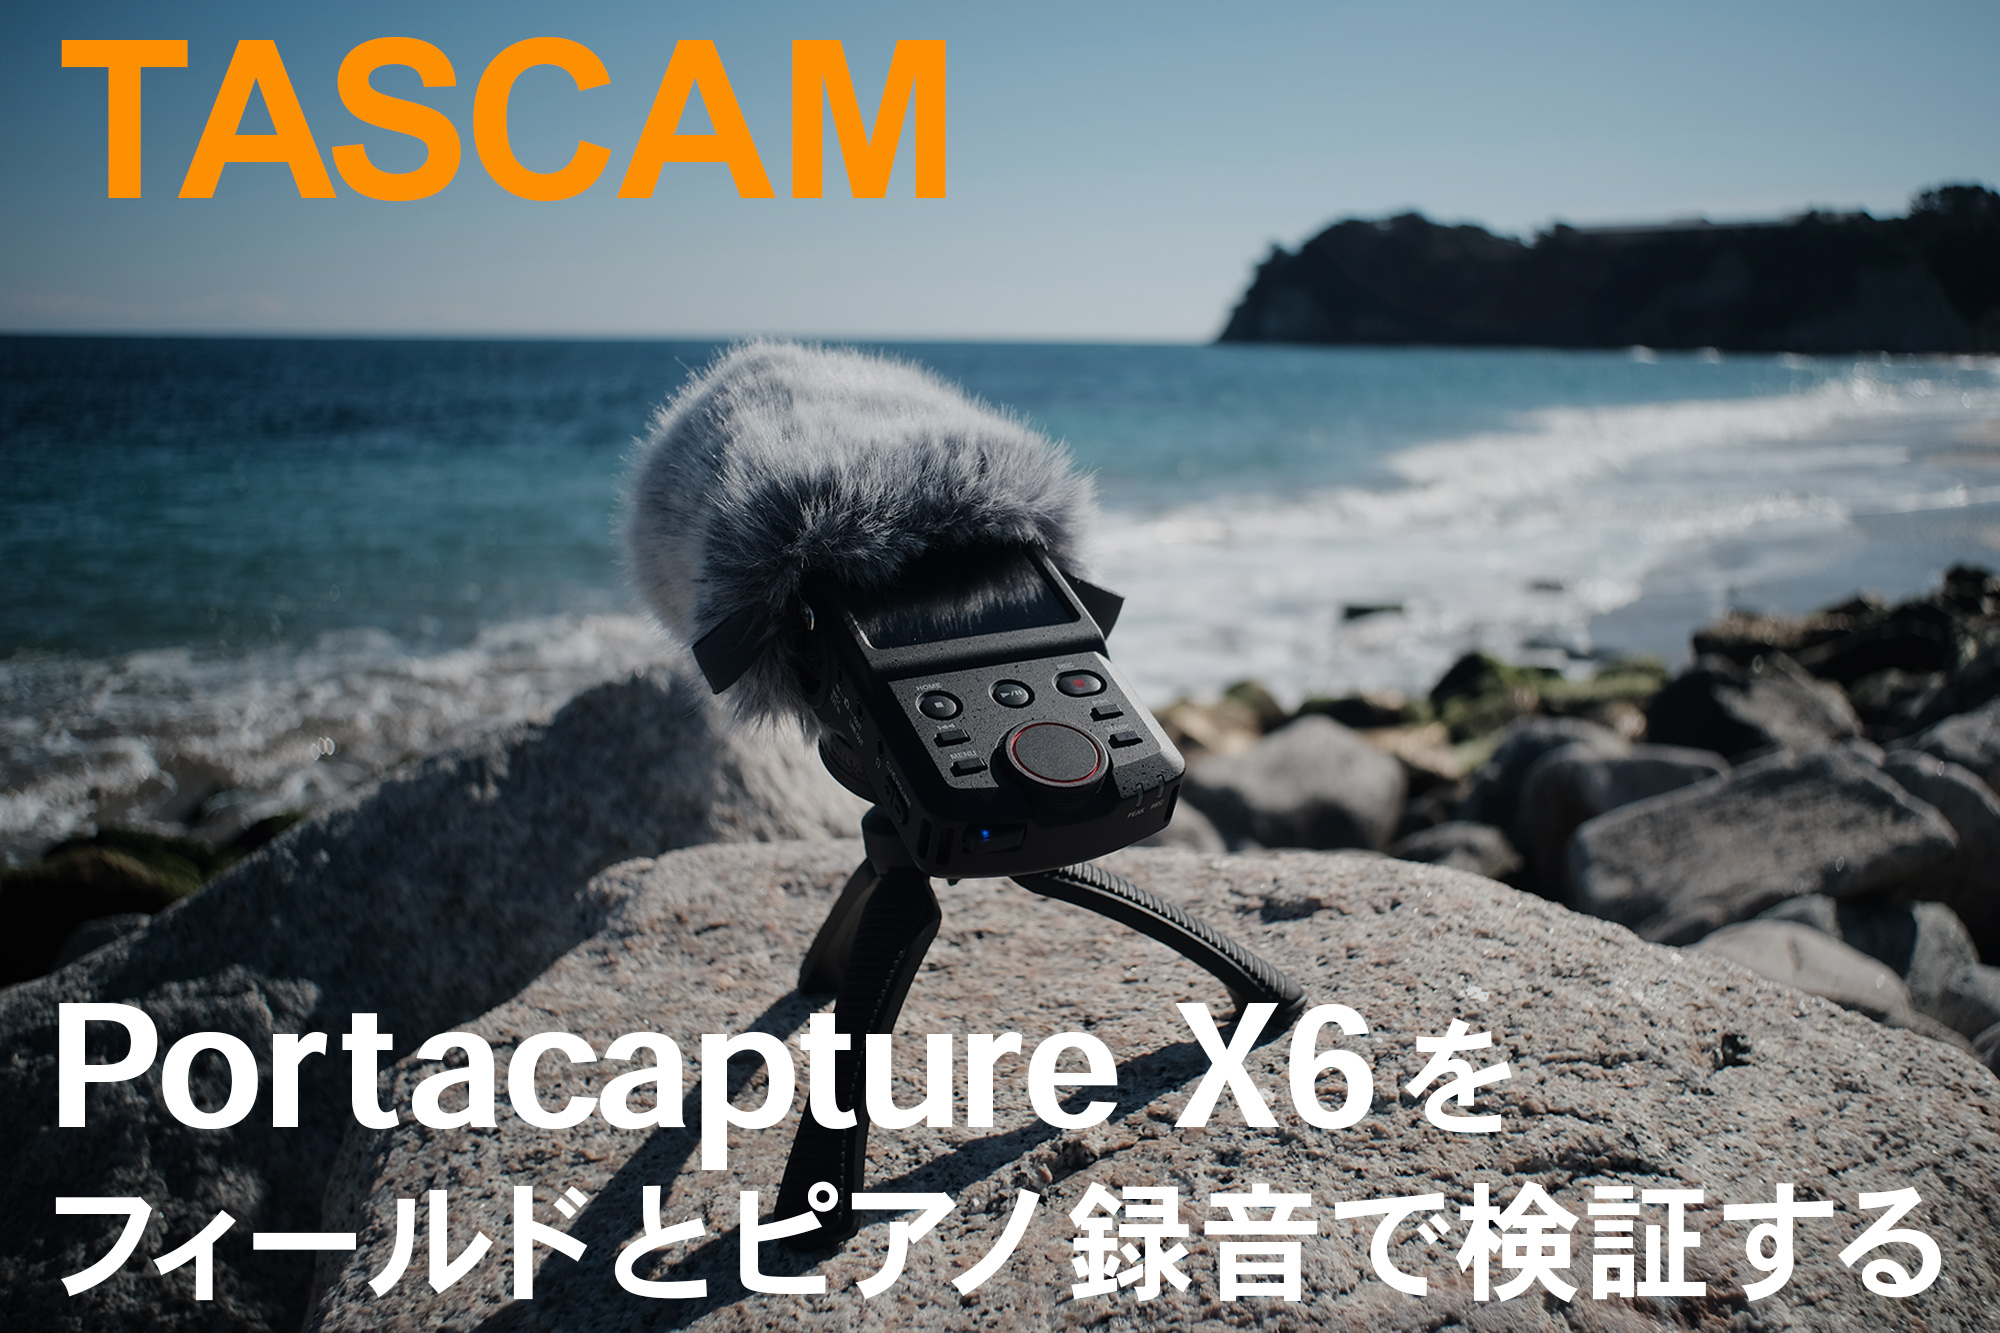 maicTASCAM(タスカム) Portacapture X6